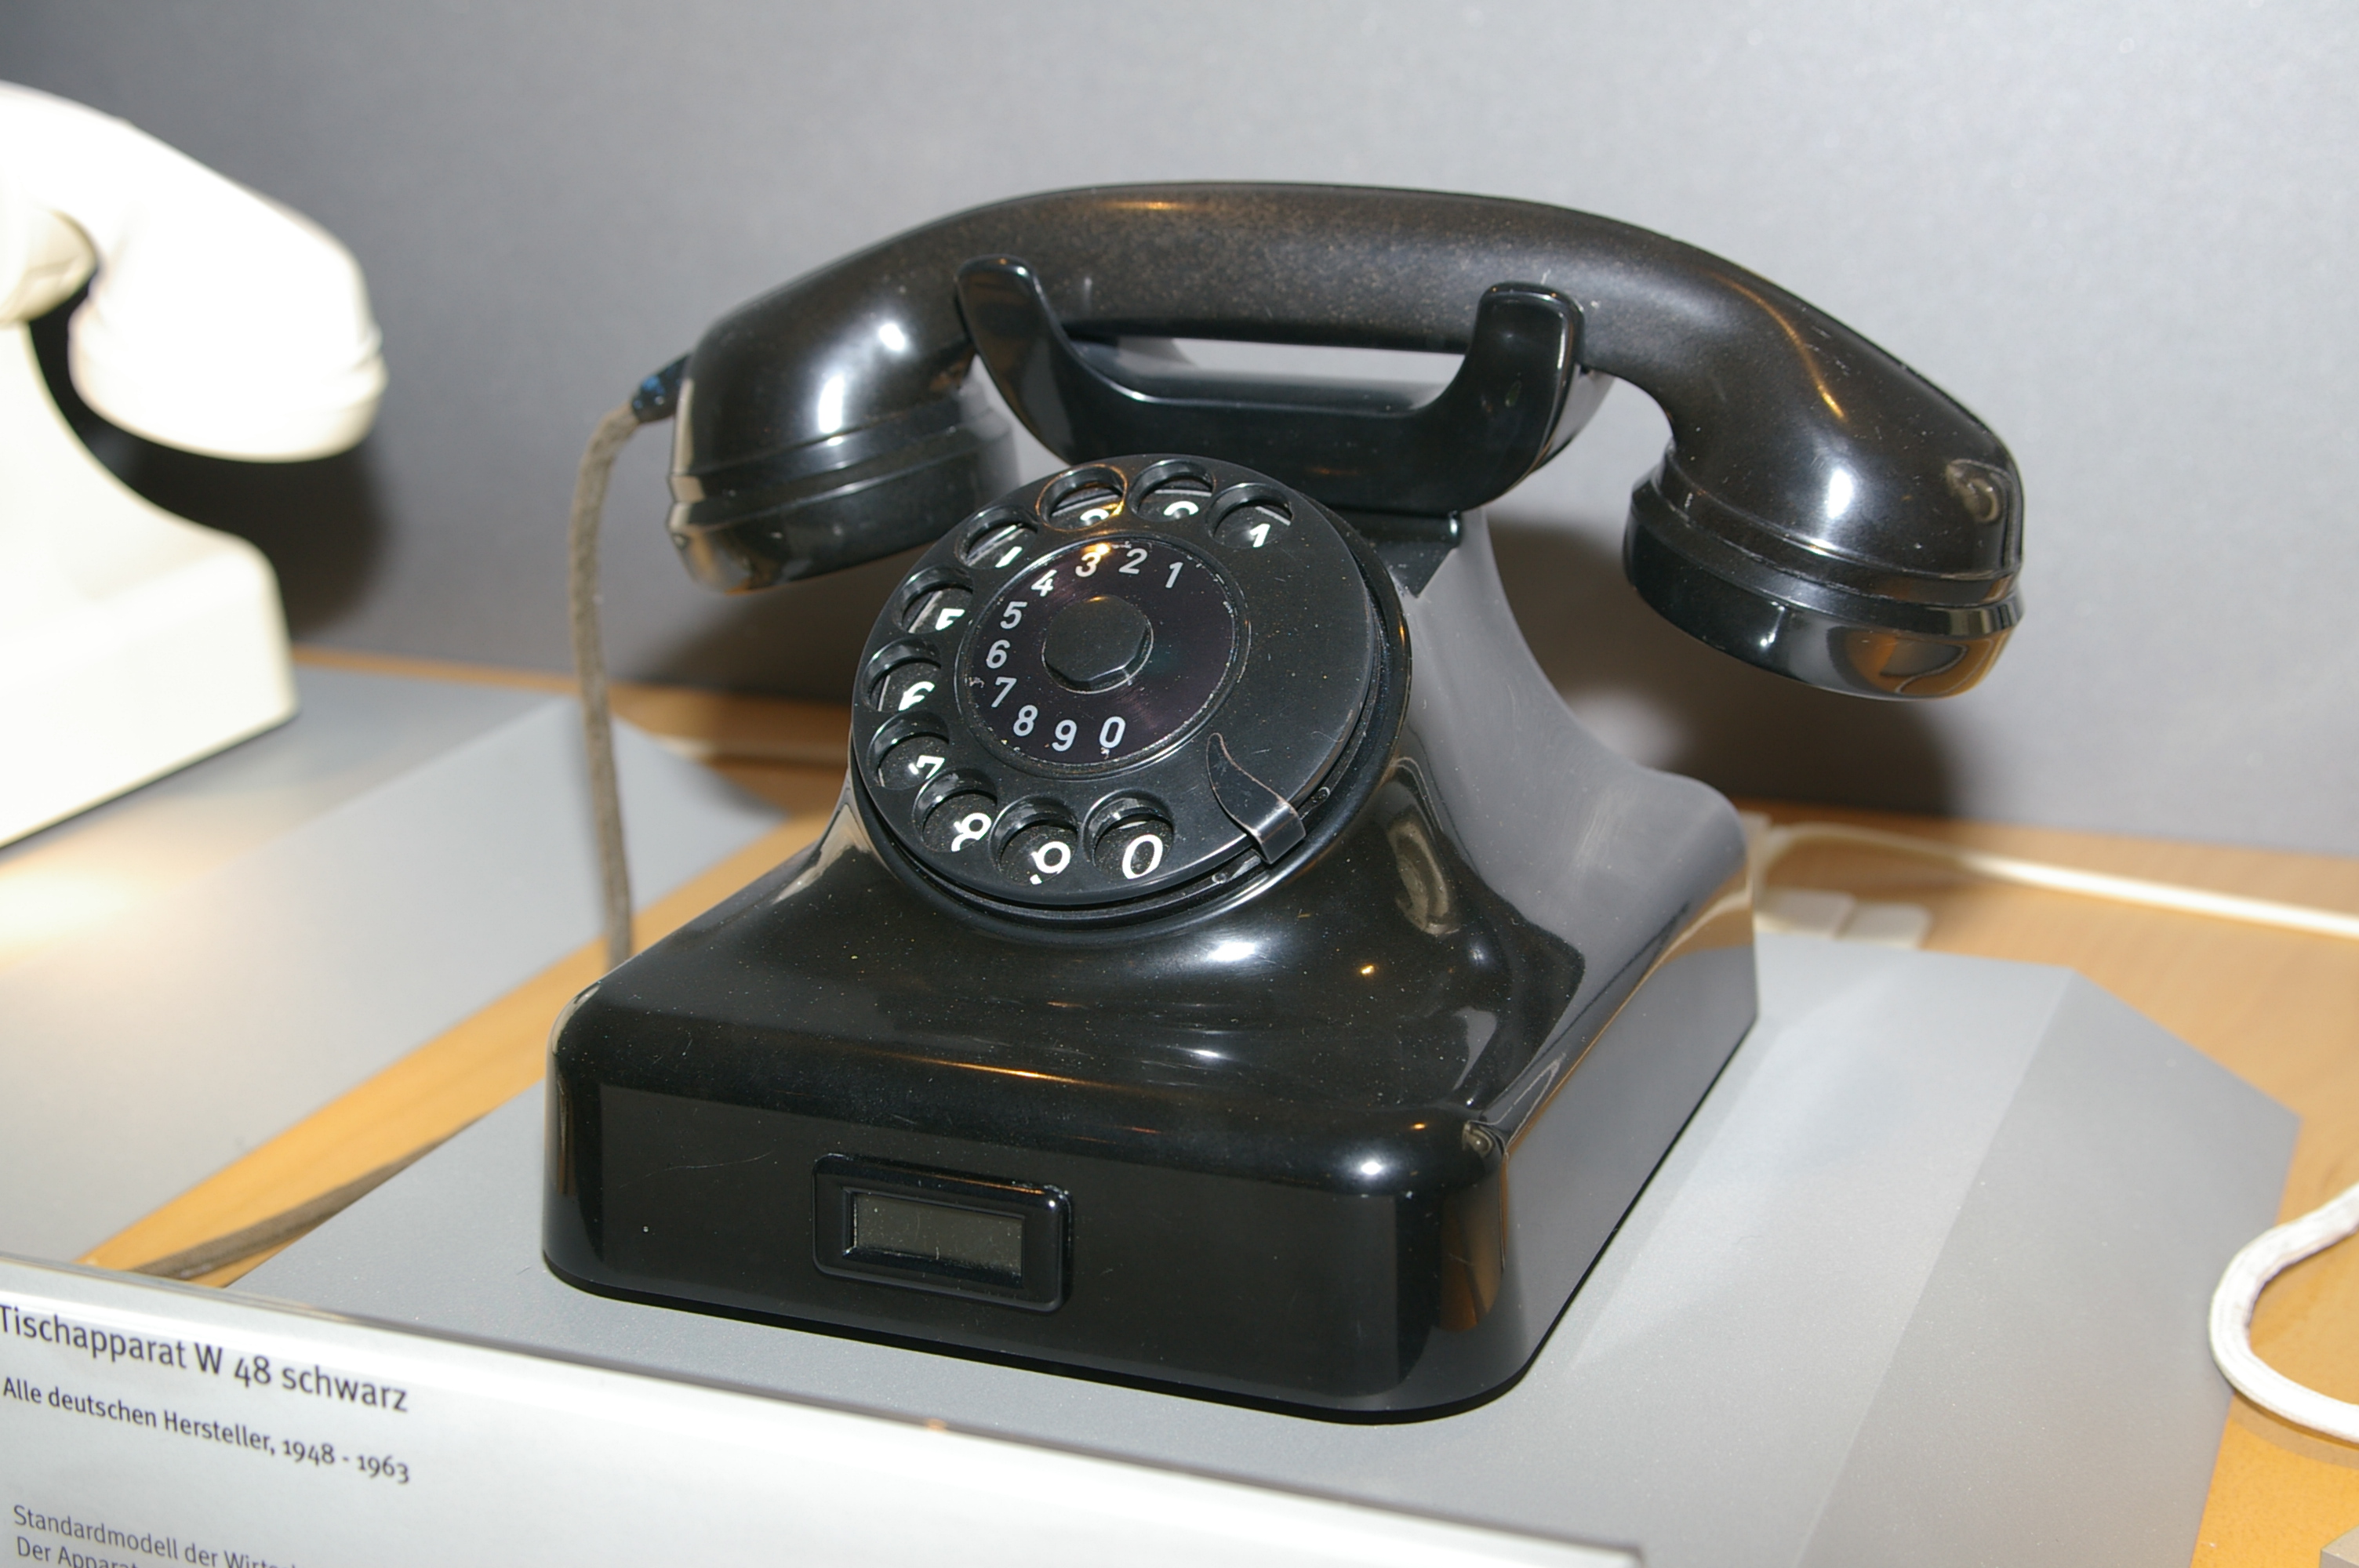 Ая 1 телефон. Siemens Halske телефон. Телефонный аппарат. Первый телефонный аппарат. Самый первый телефонный аппарат.